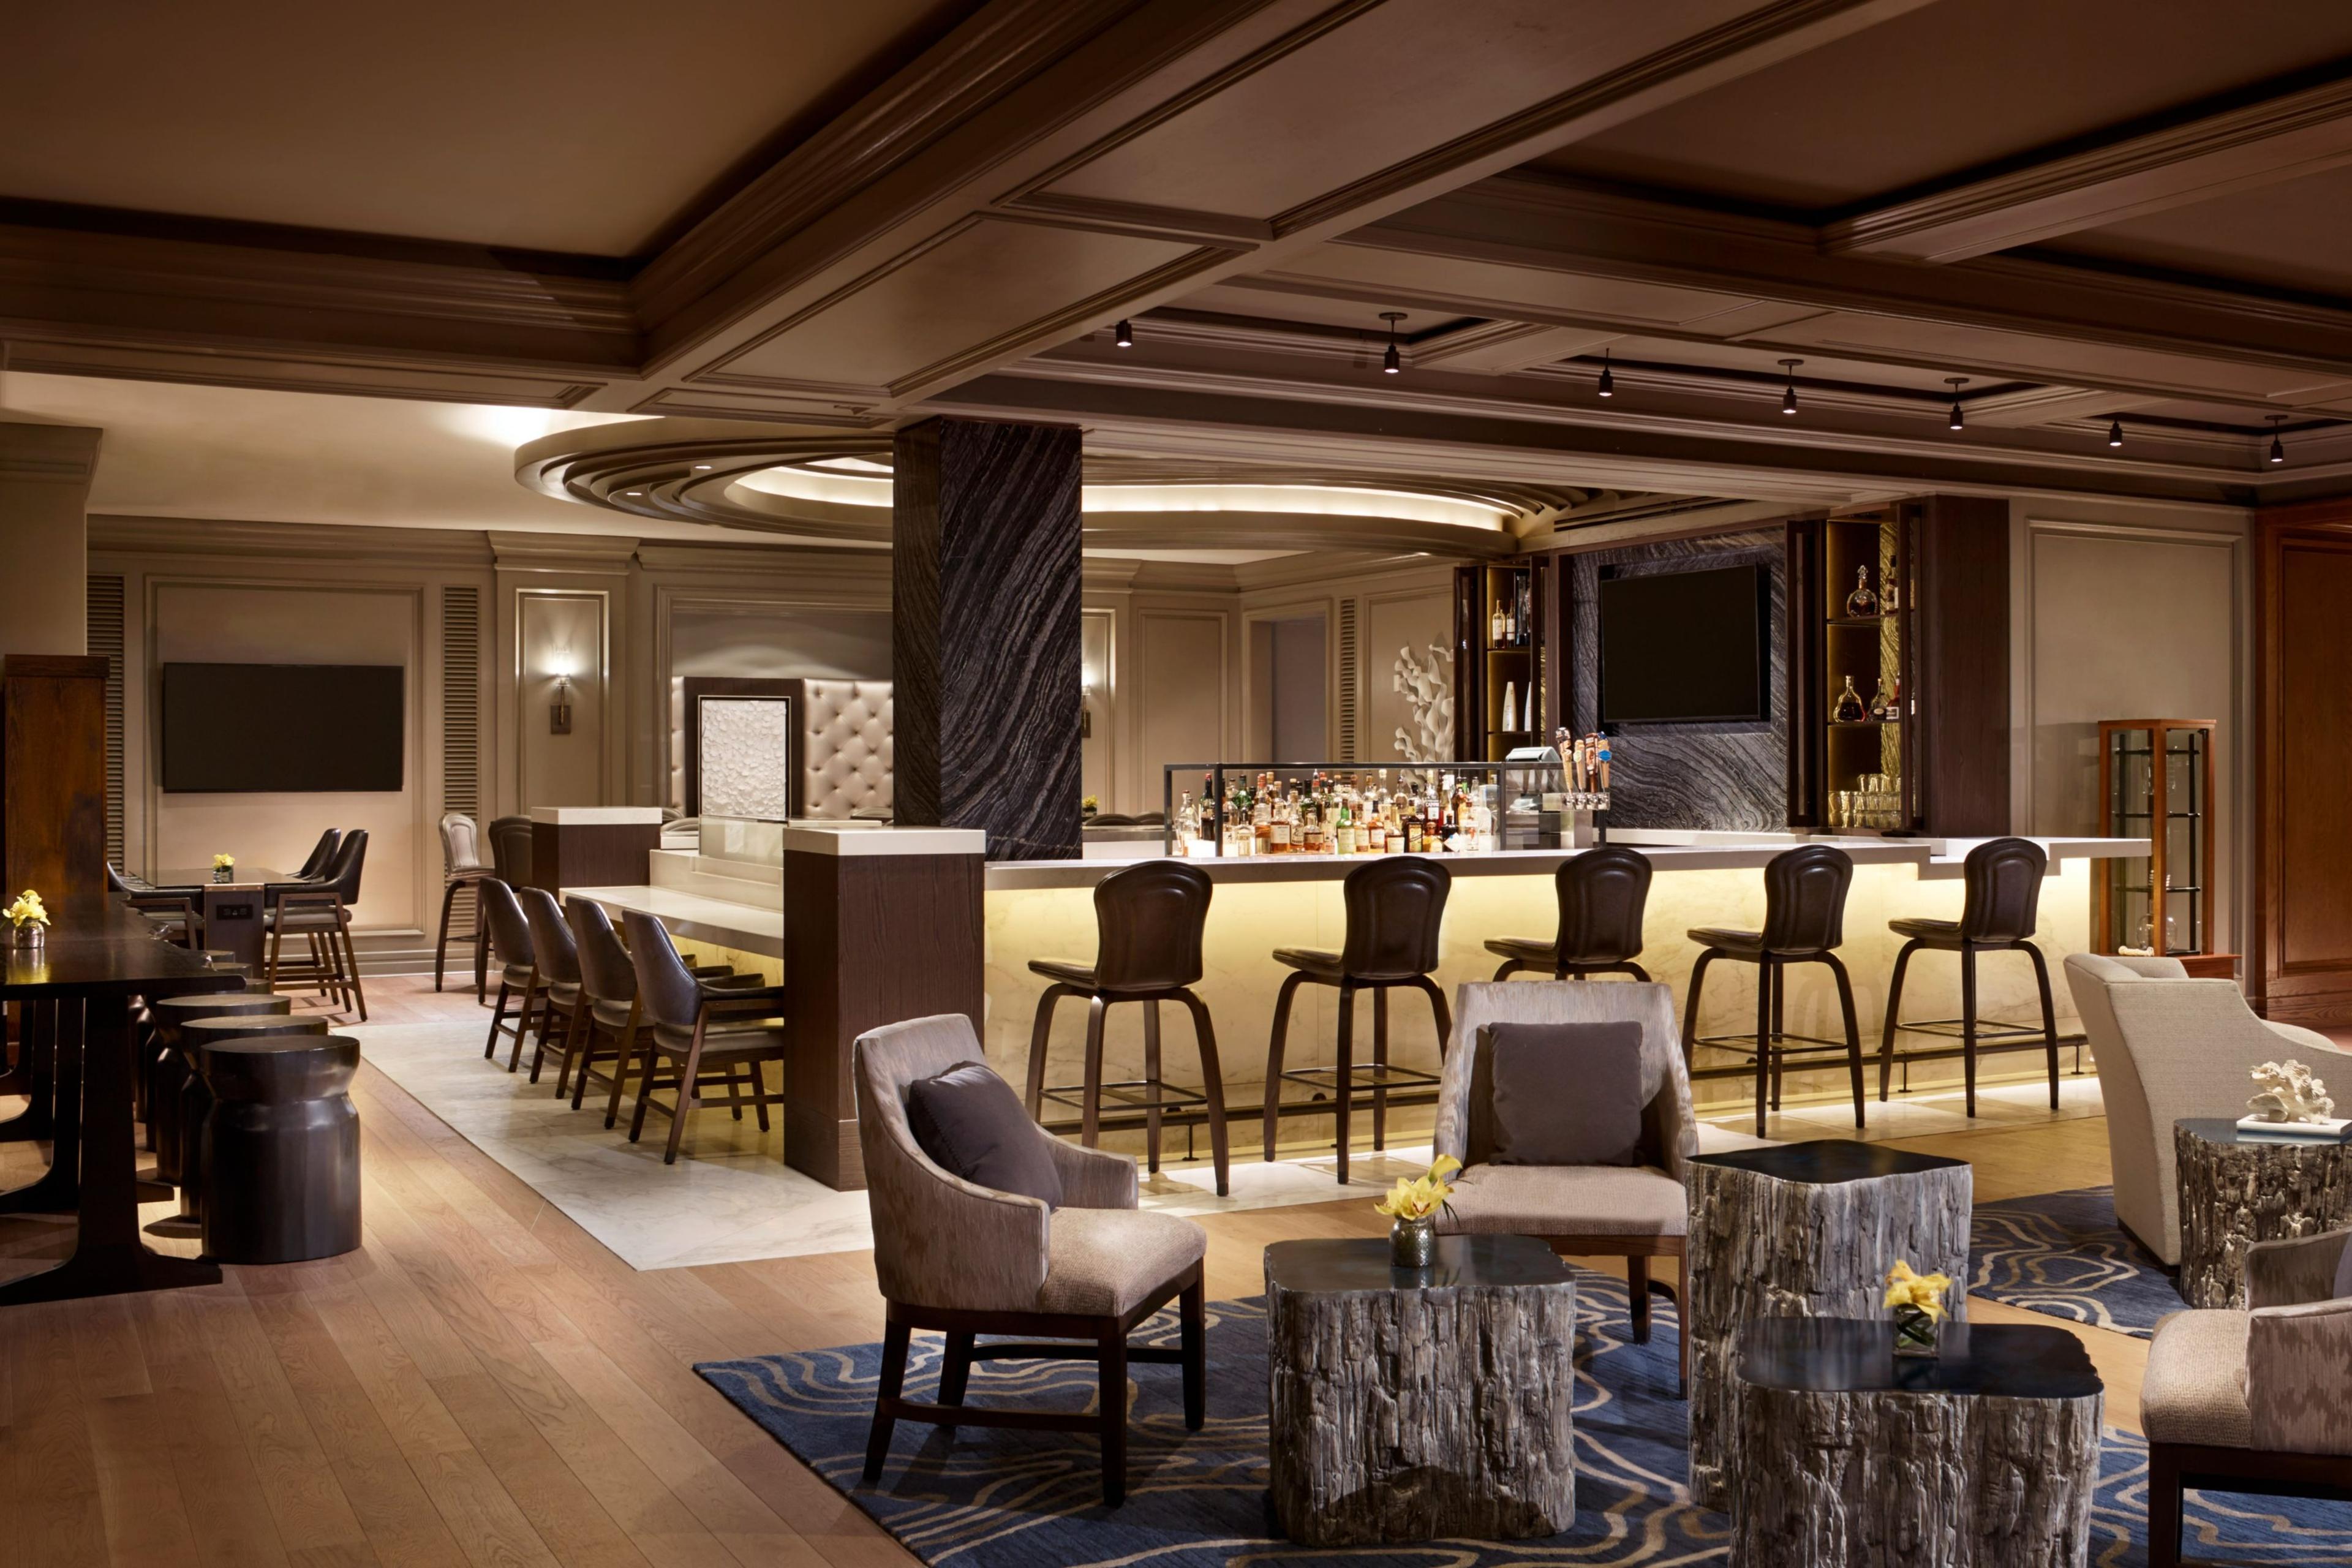 The Lobby Bar @ The Ritz Carlton Amelia Island